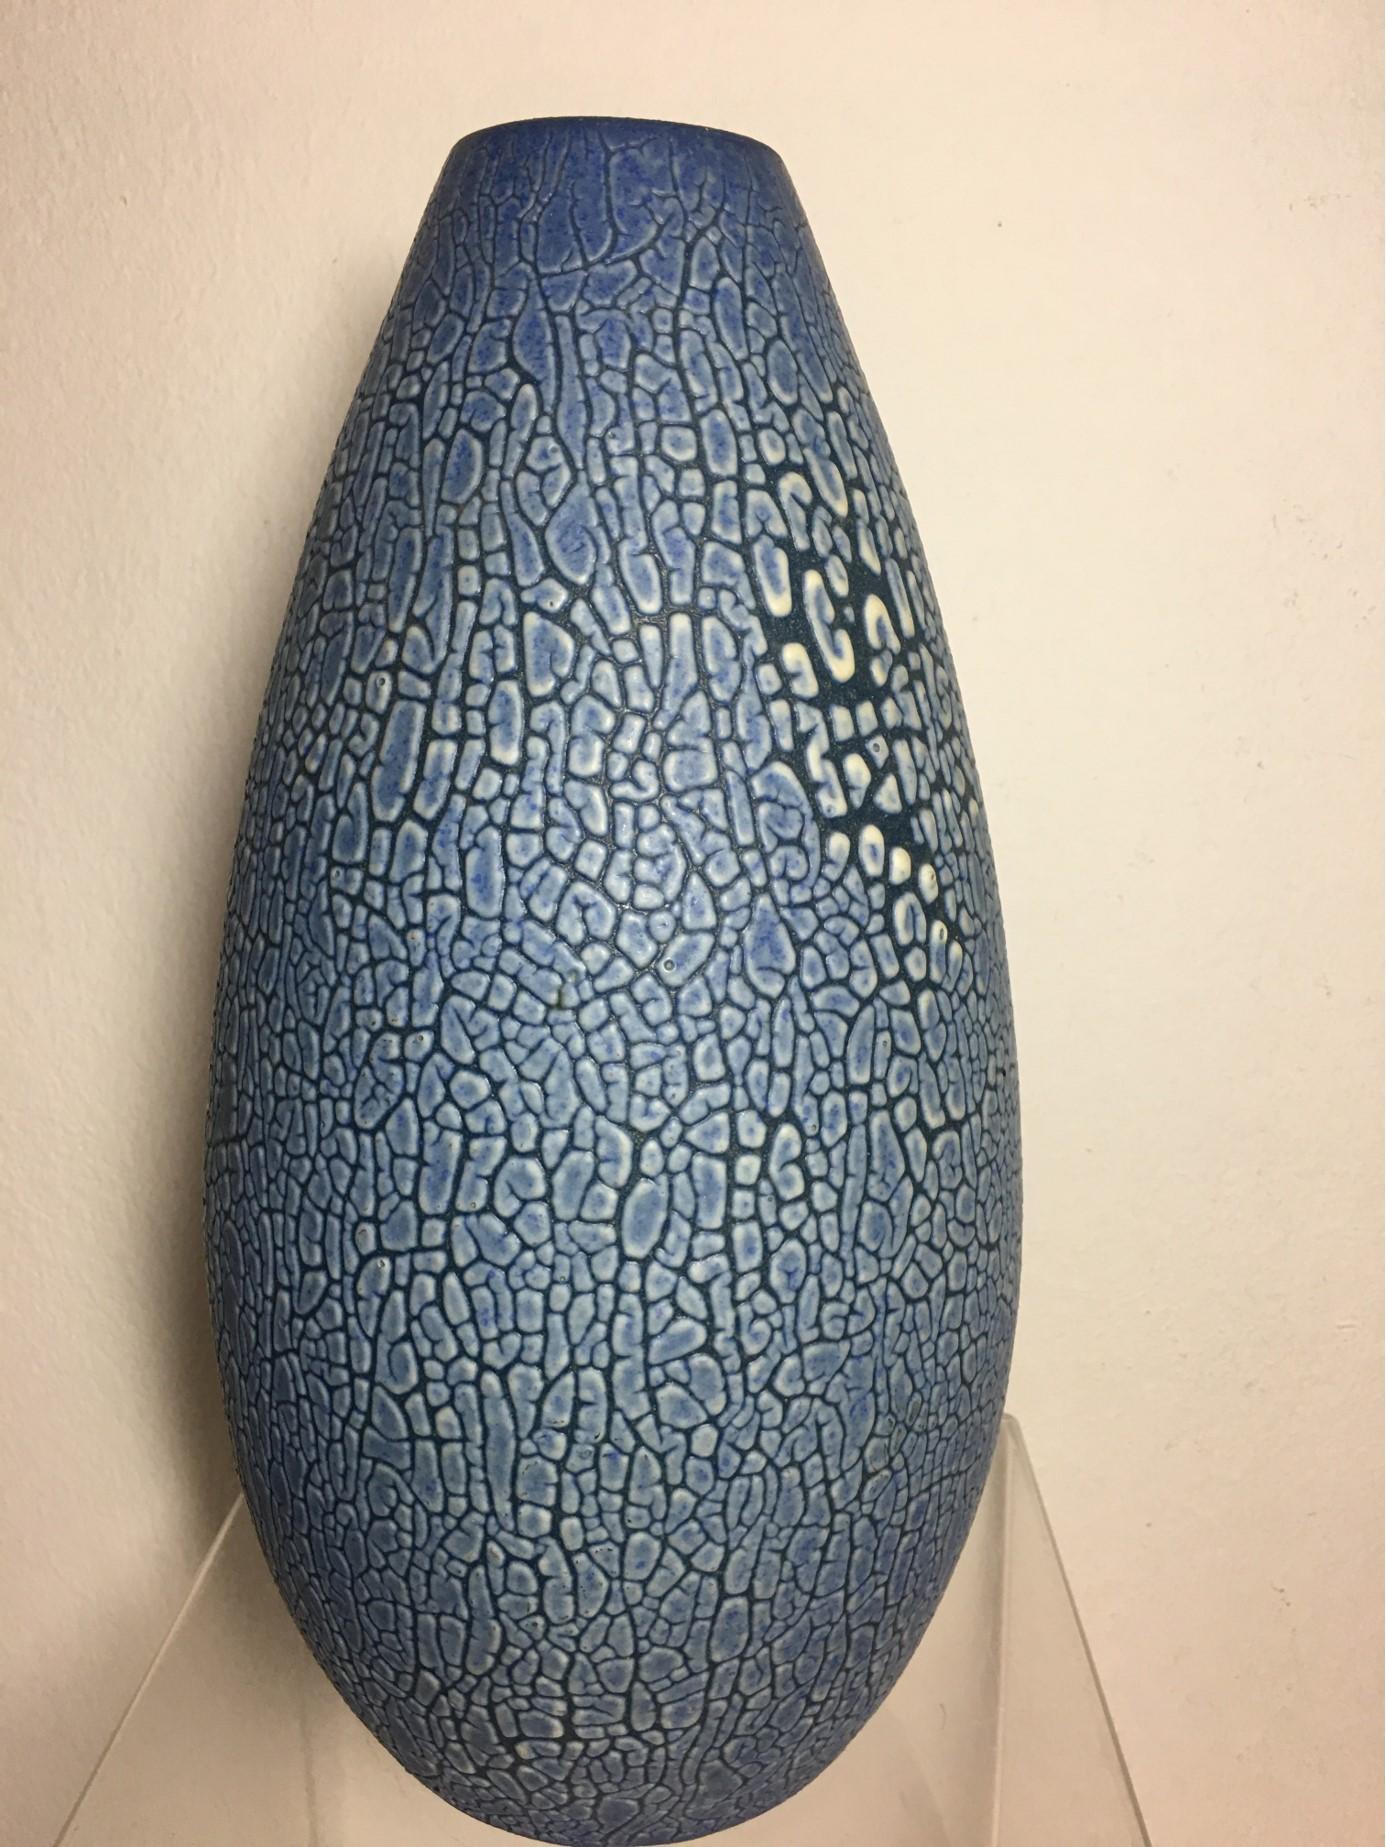 Reptile Skin Look Ceramic Vase from 1950s Germany For Sale 3